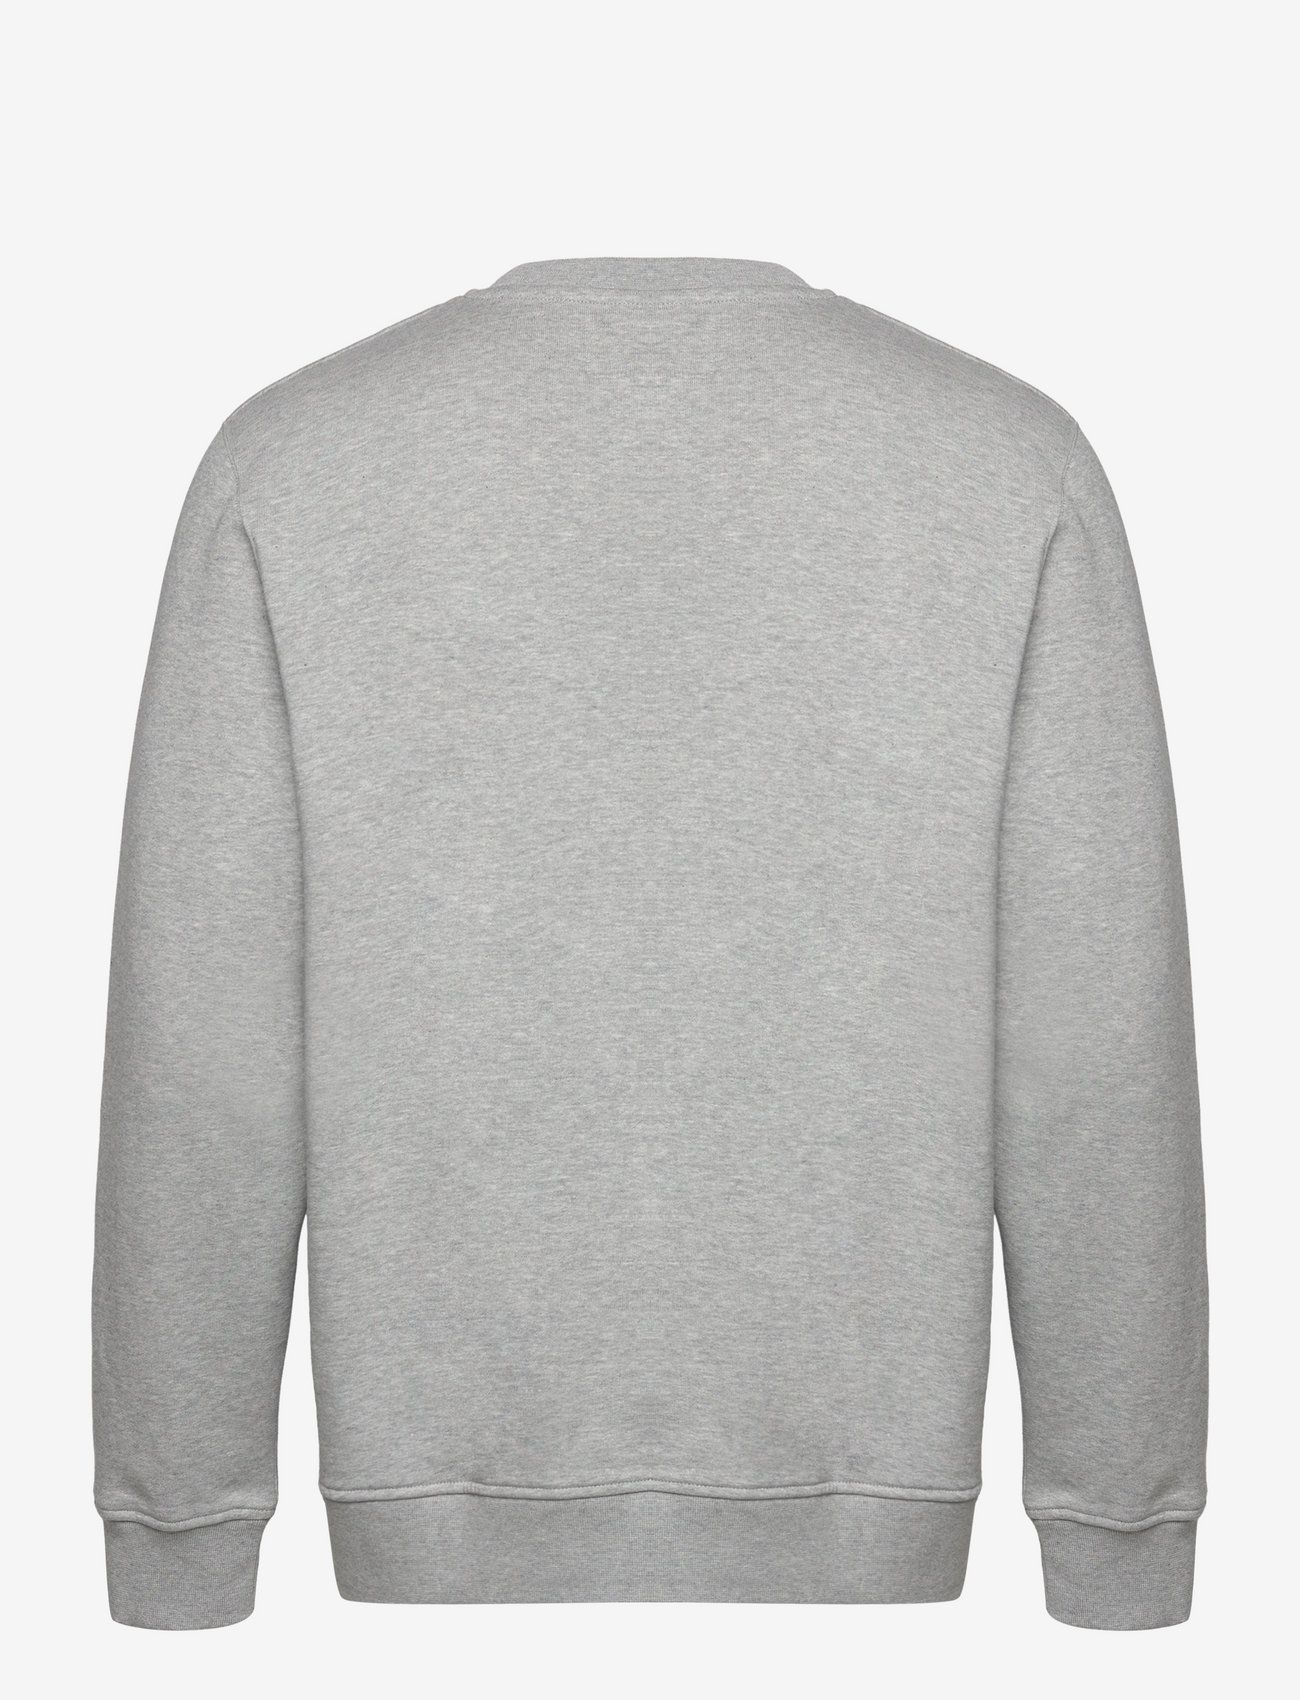 Double A by Wood Wood - Tye sweatshirt GOTS - sweatshirts - grey melange - 1